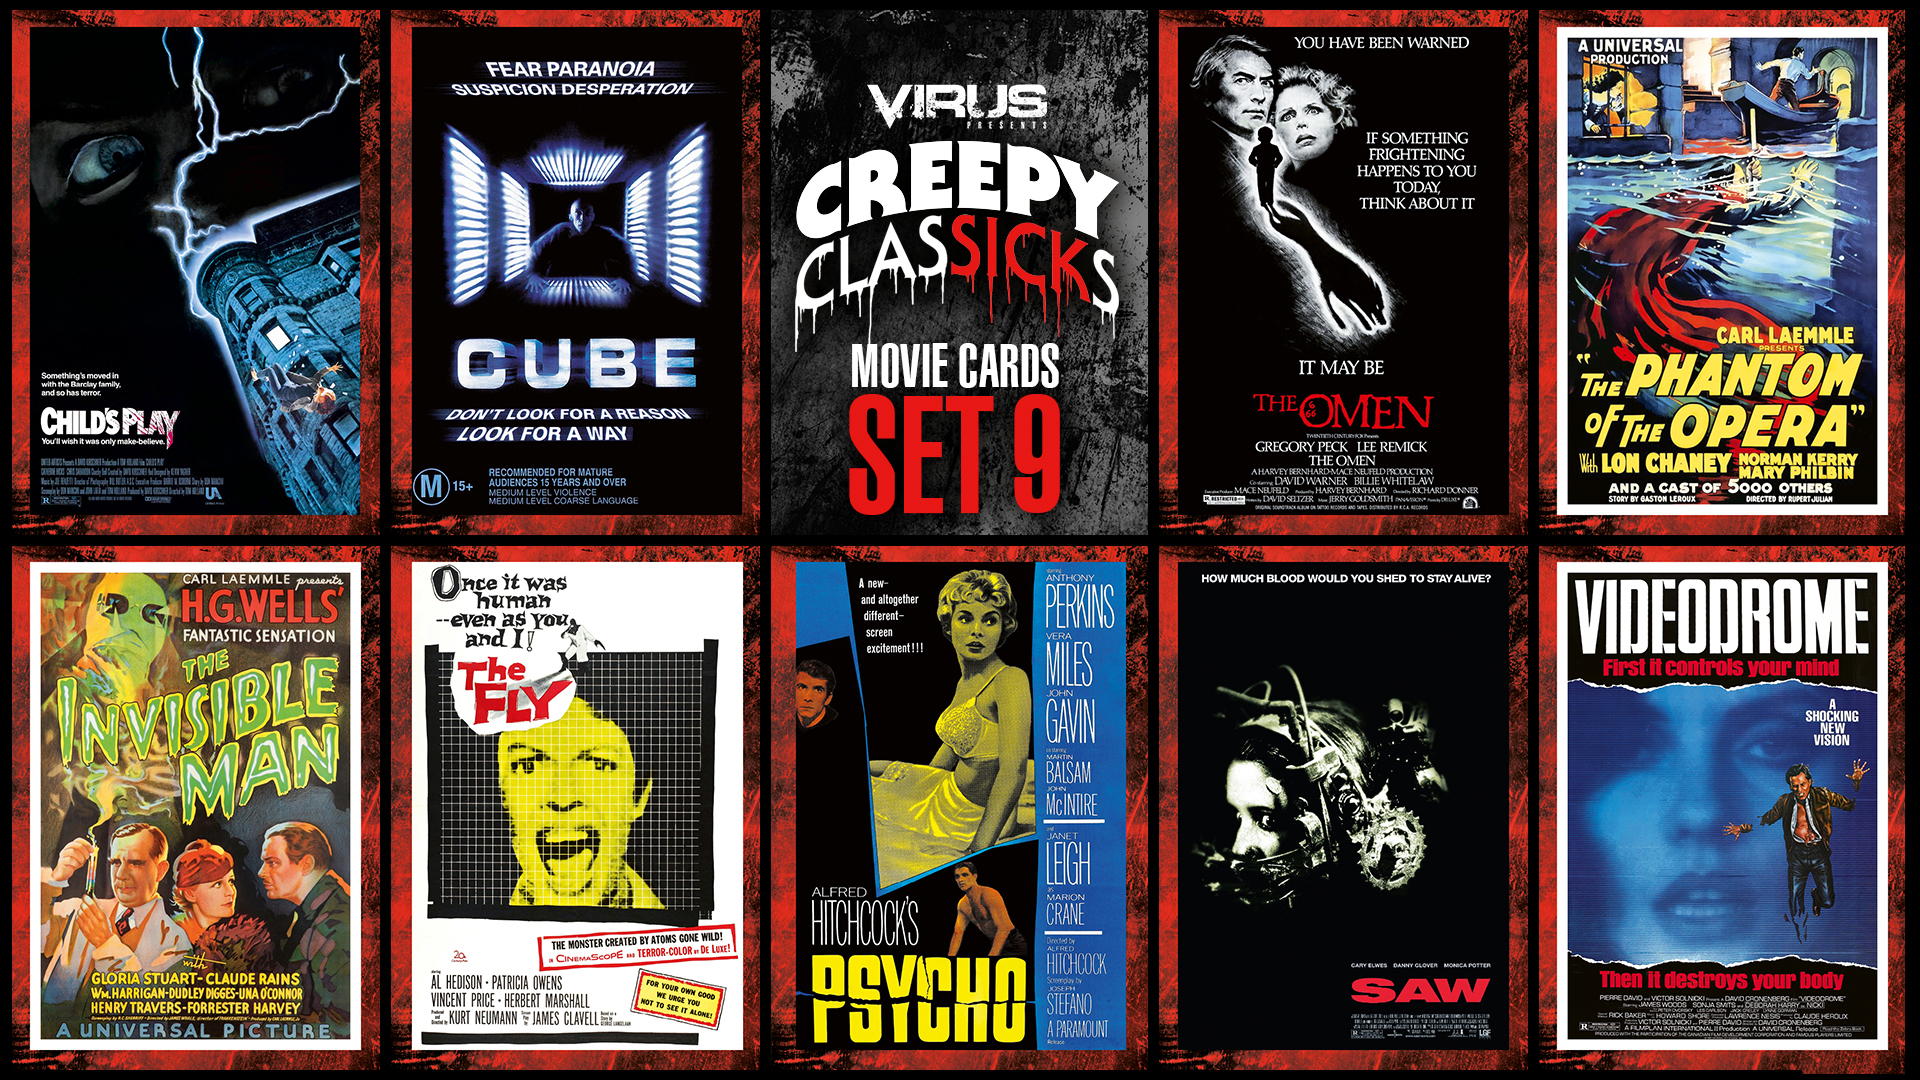 VIRUS Creepy ClasSICKs Movie Cards Set #09